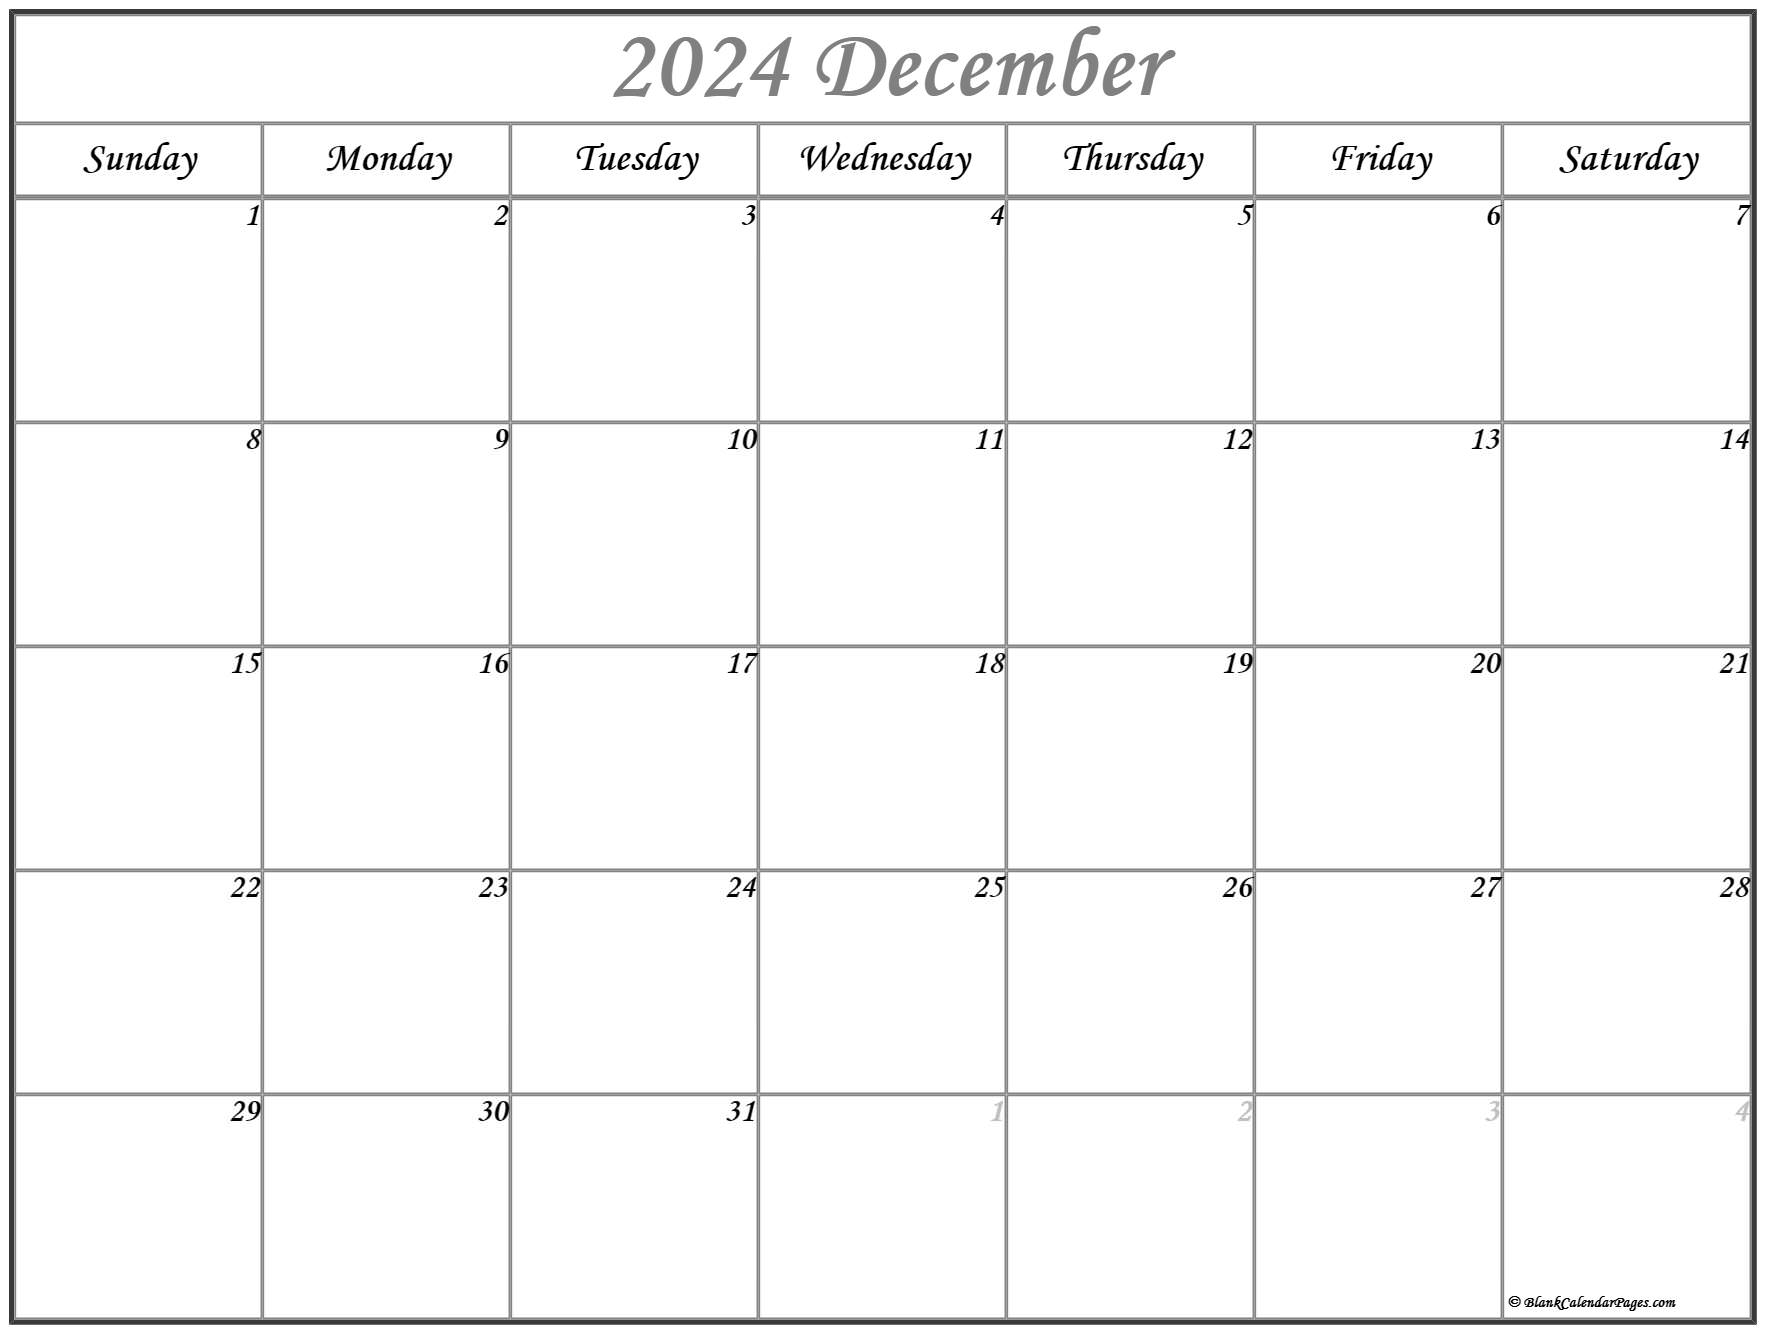 December 2022 Planner Printable - Printable World Holiday